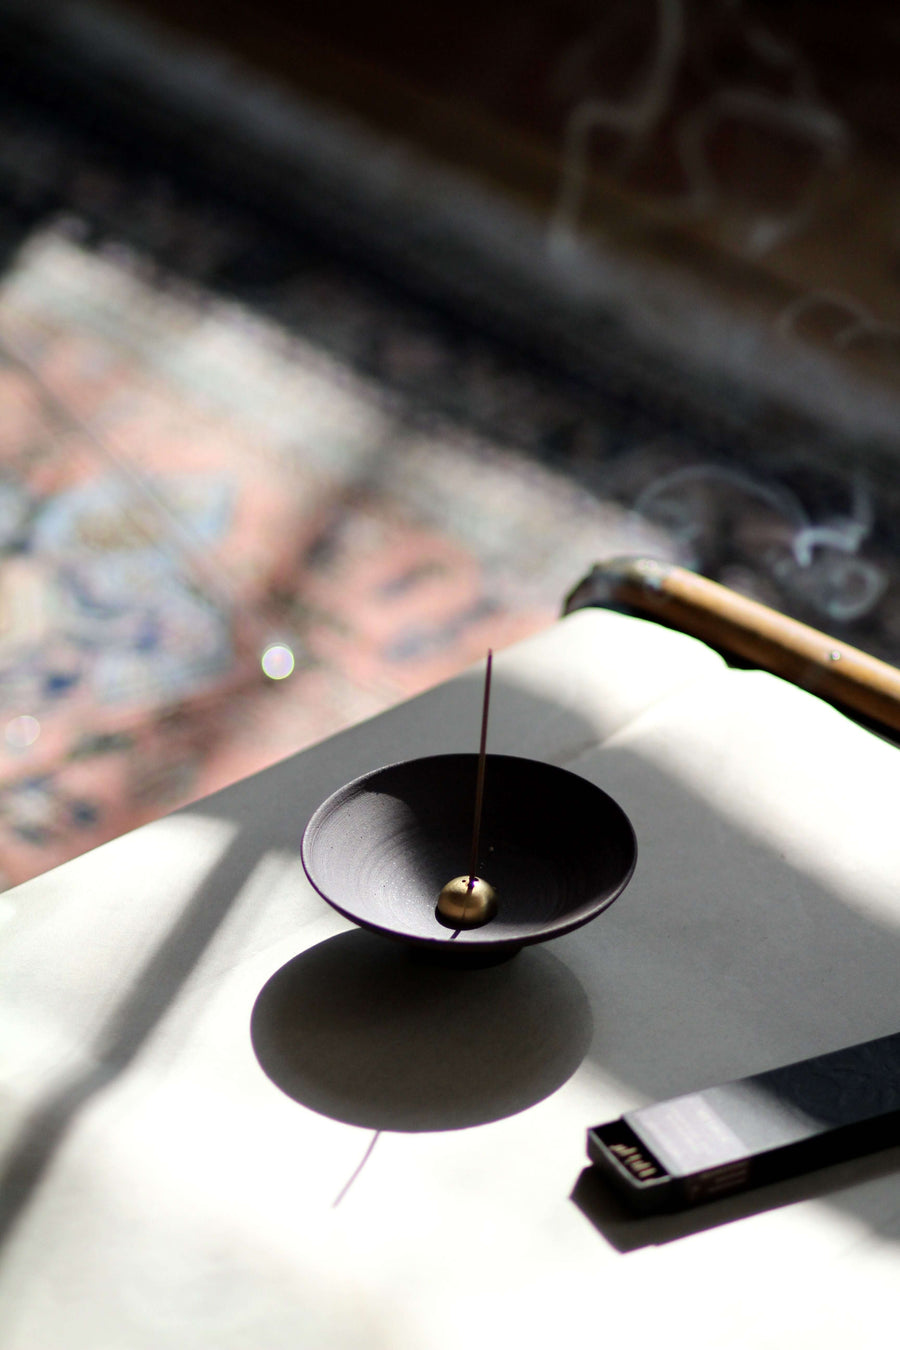 Beautiful Purple Terracotta Incense Bowl Holder. Zen. Artisan Made